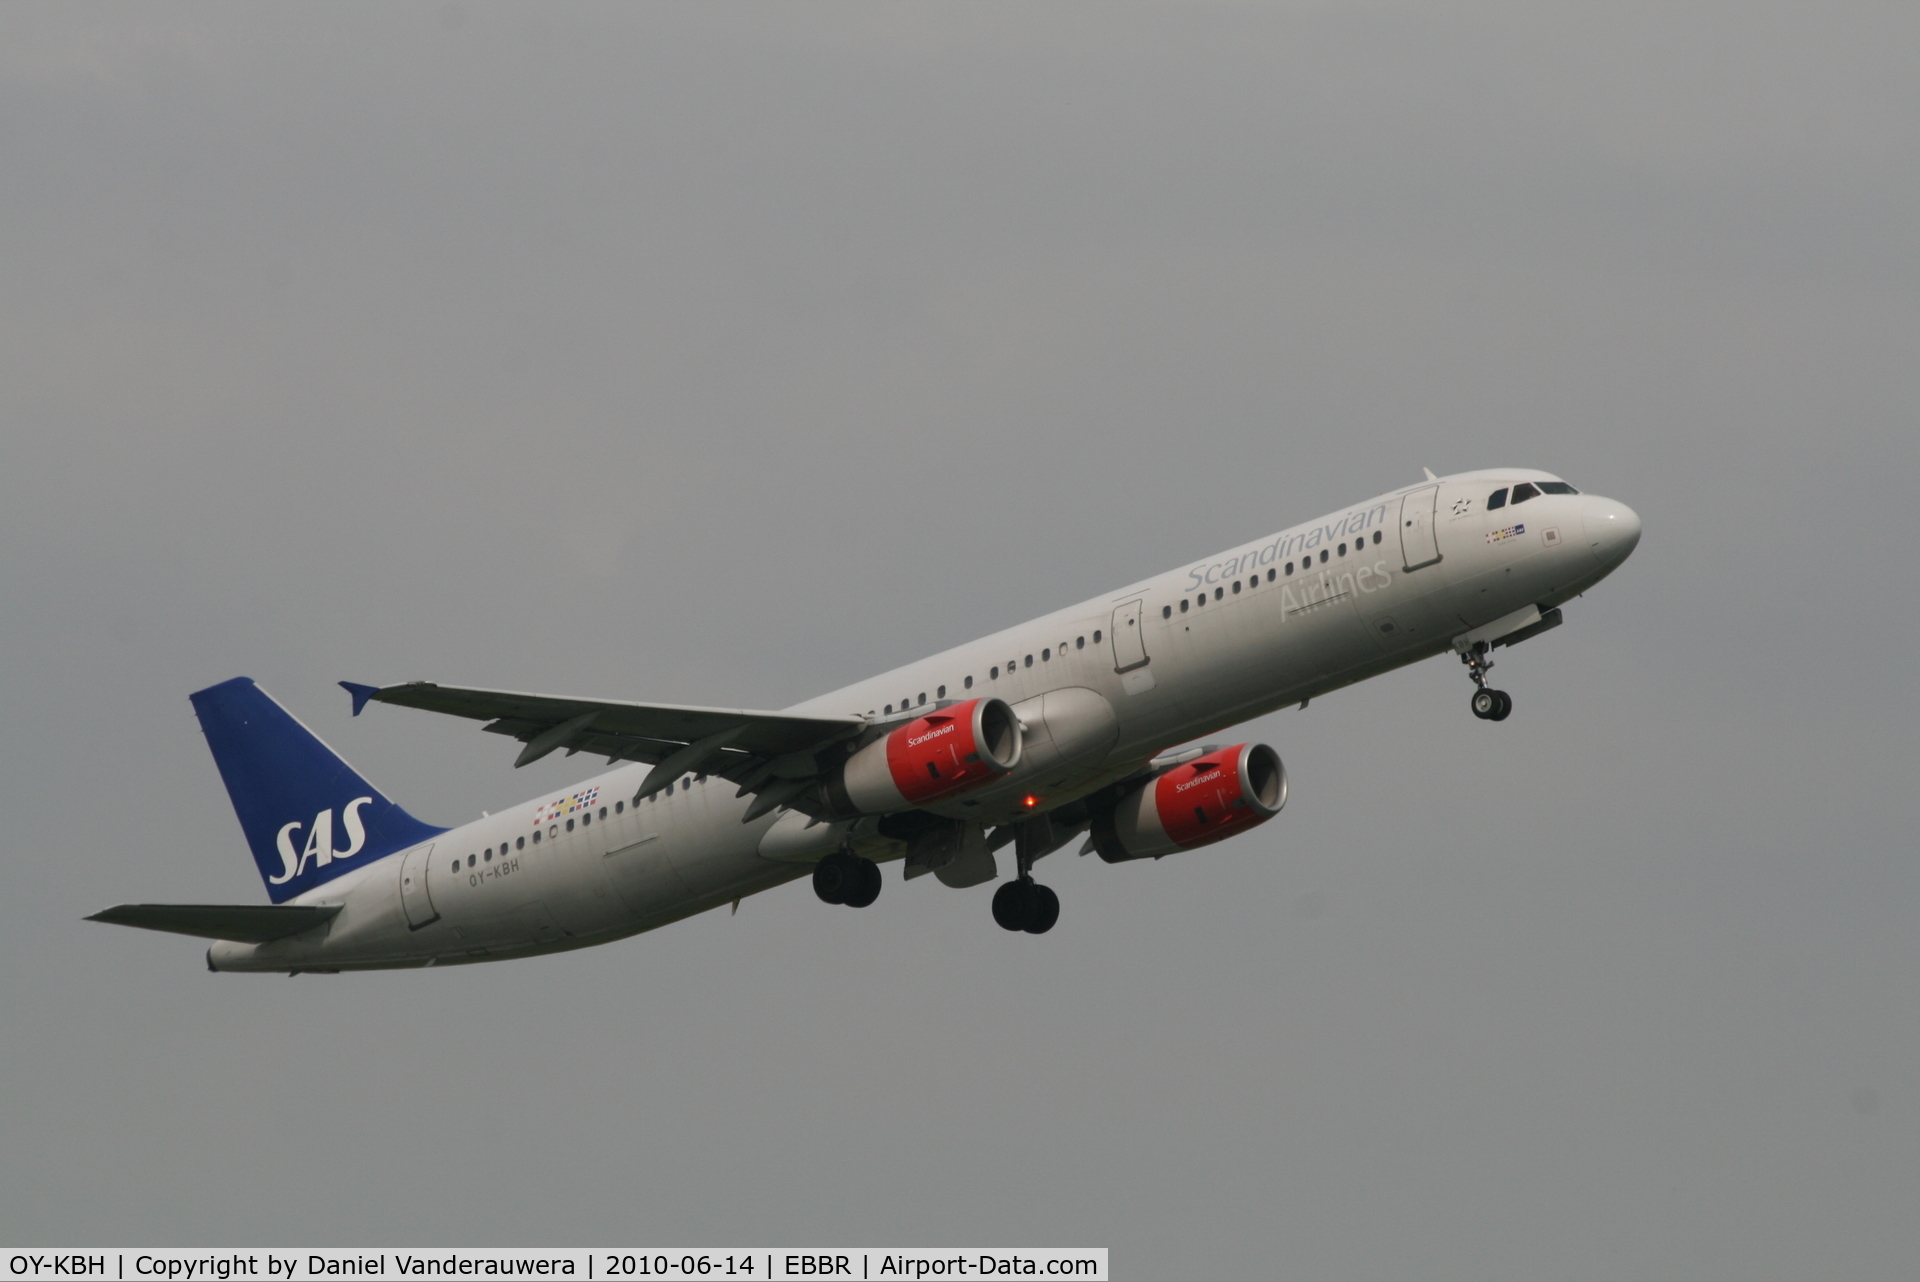 OY-KBH, 2002 Airbus A321-232 C/N 1675, Flight SK594 is taking off from RWY 07R